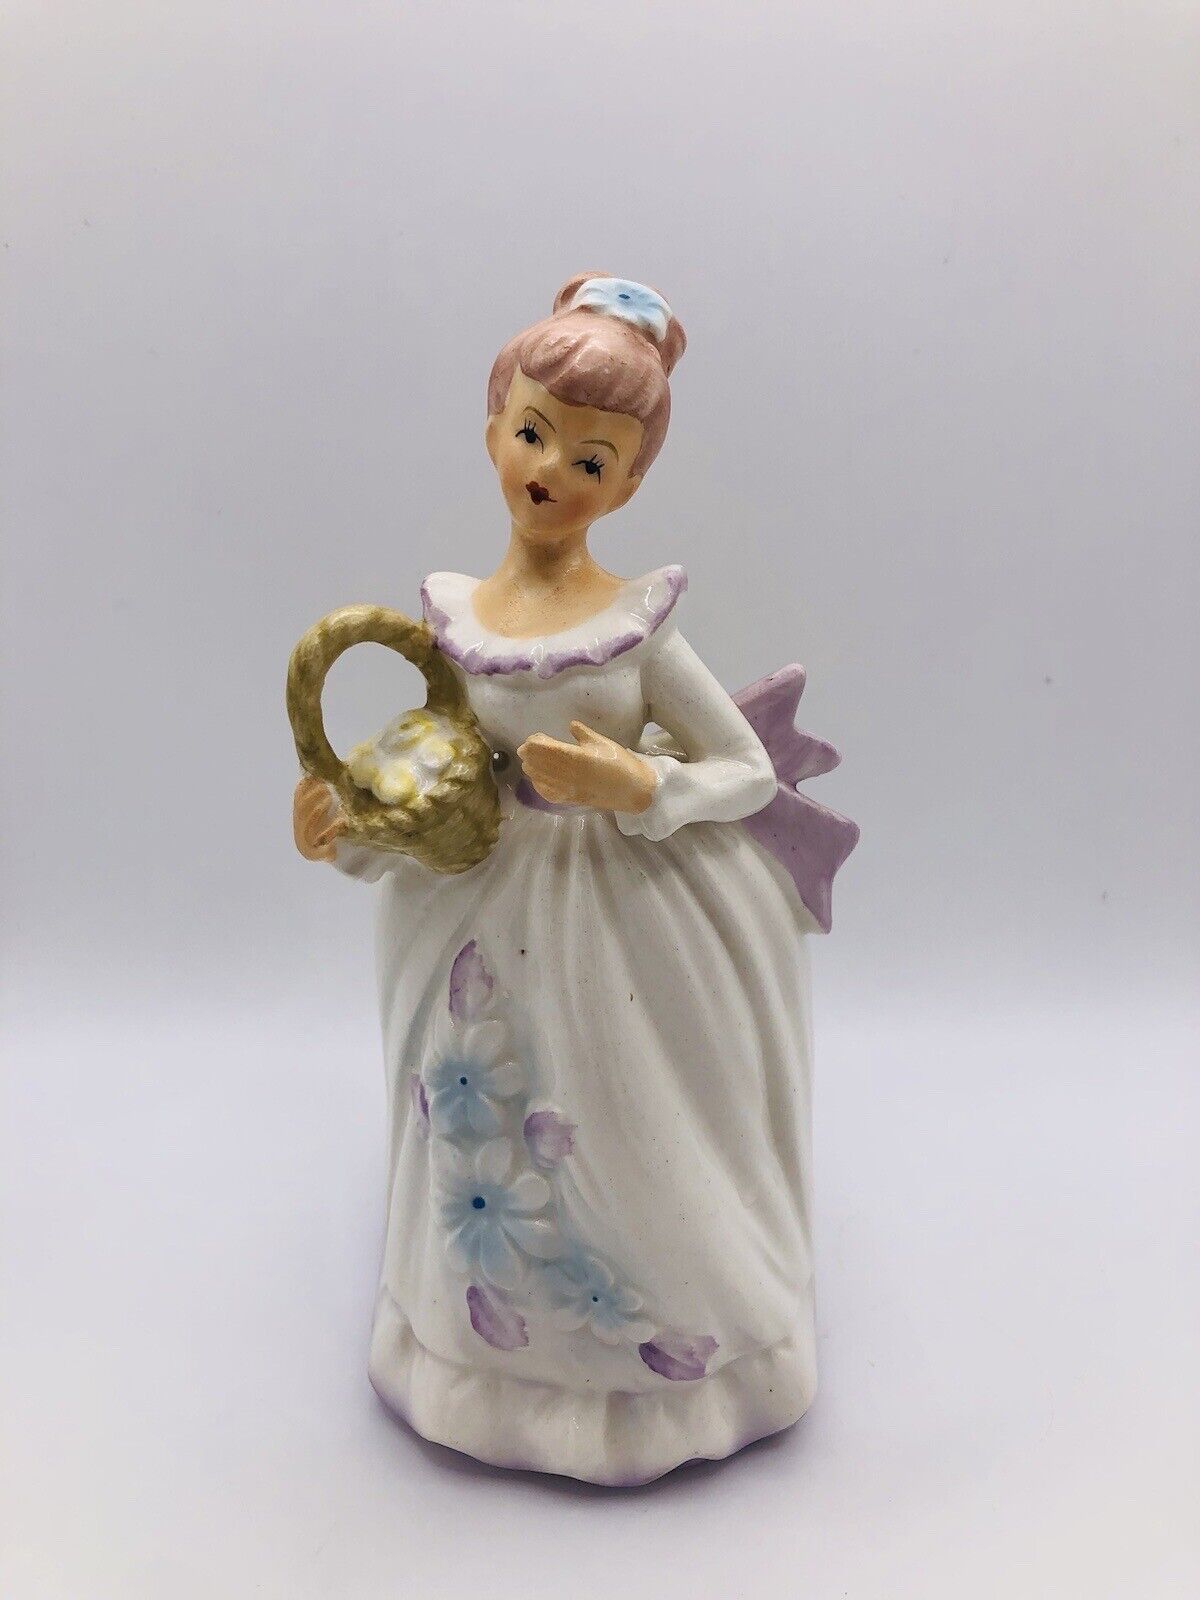 Vintage 1950’s Napco Ceramic Planter Girl in Purple Dress With Flowers #8046